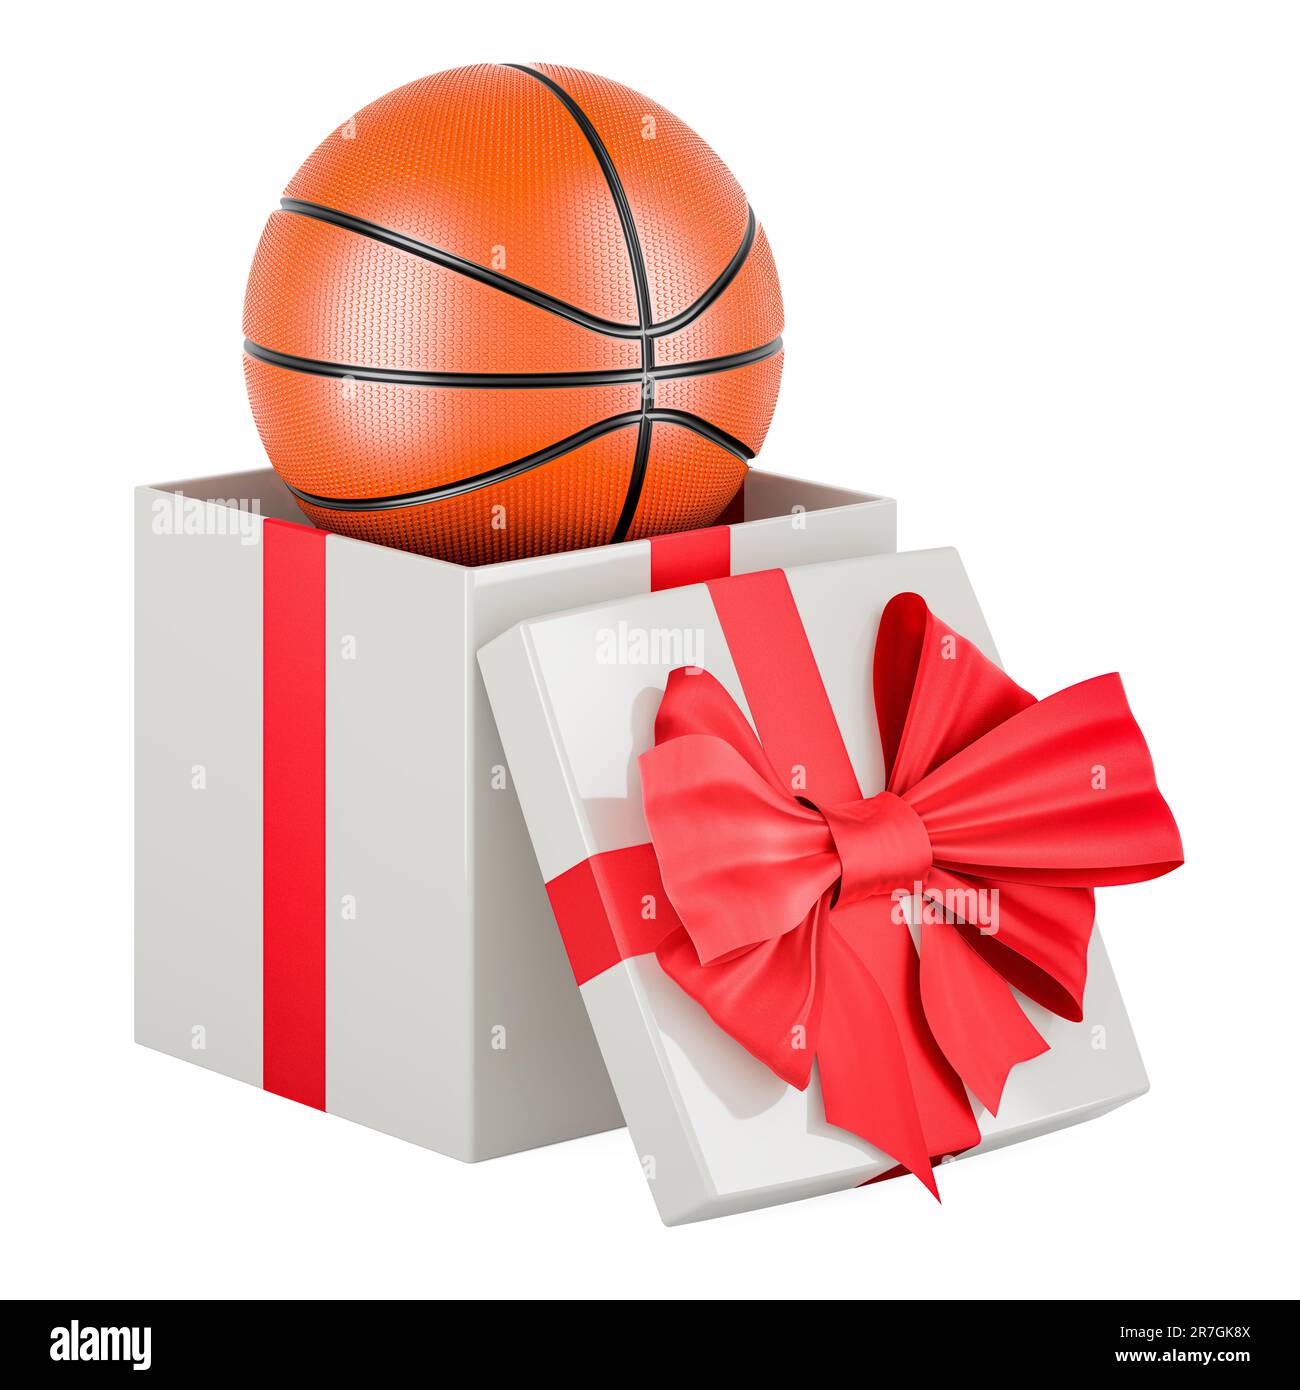 Pelota de baloncesto dentro de la caja de regalo, representación